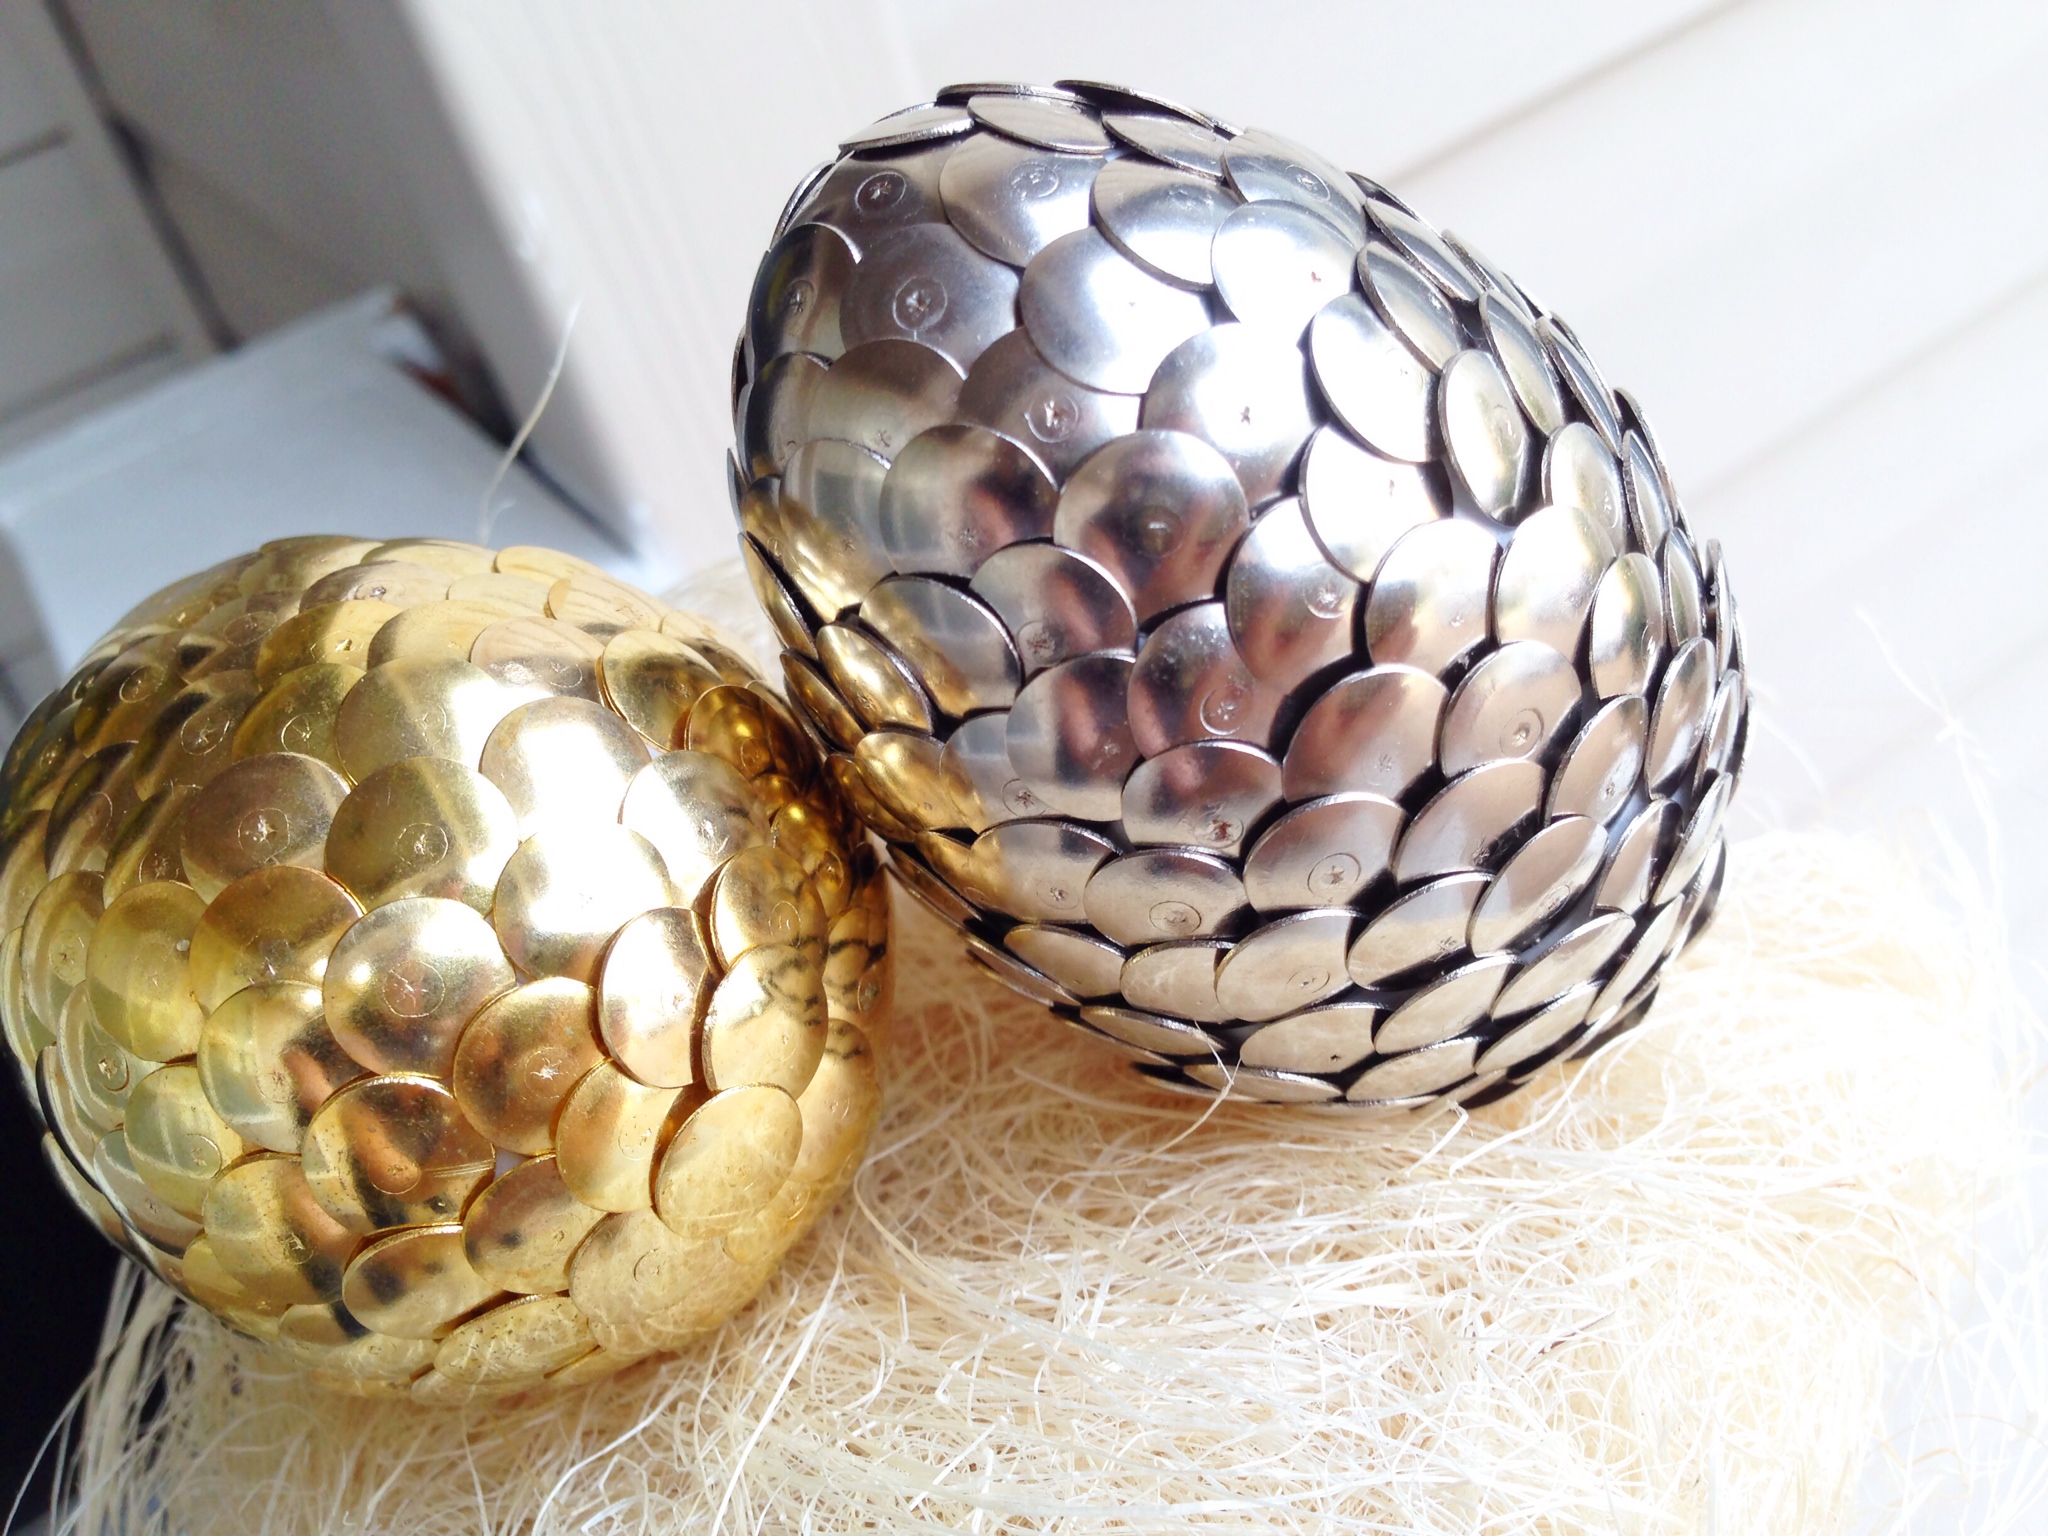 26 DIY Easter Egg Ideas